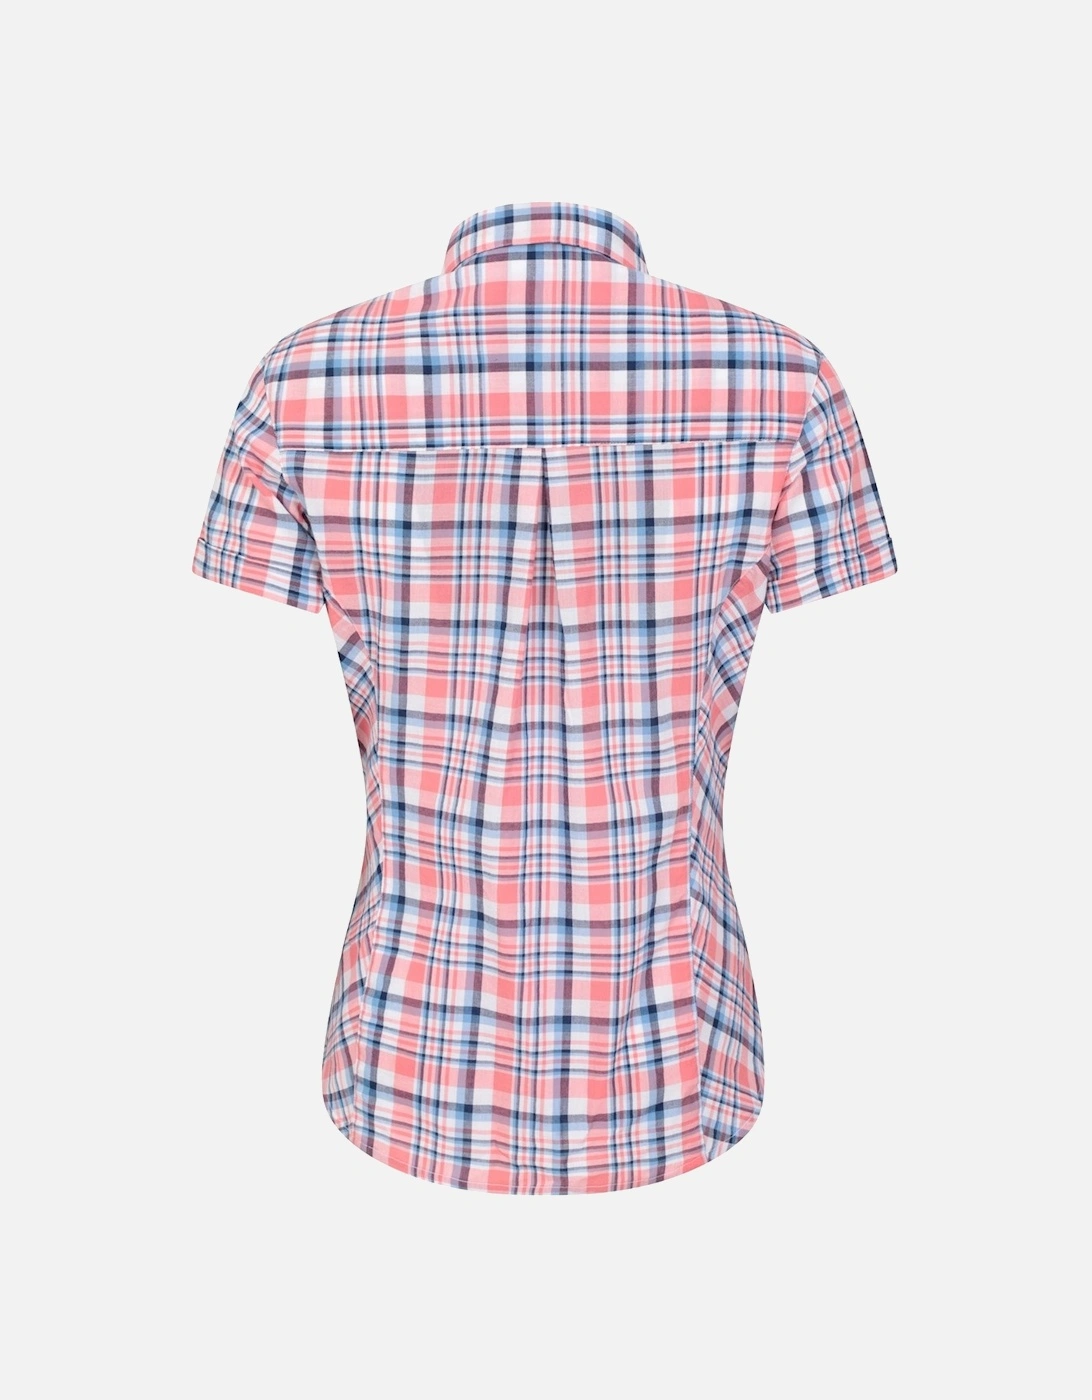 Womens/Ladies Cotton Holiday Shirt